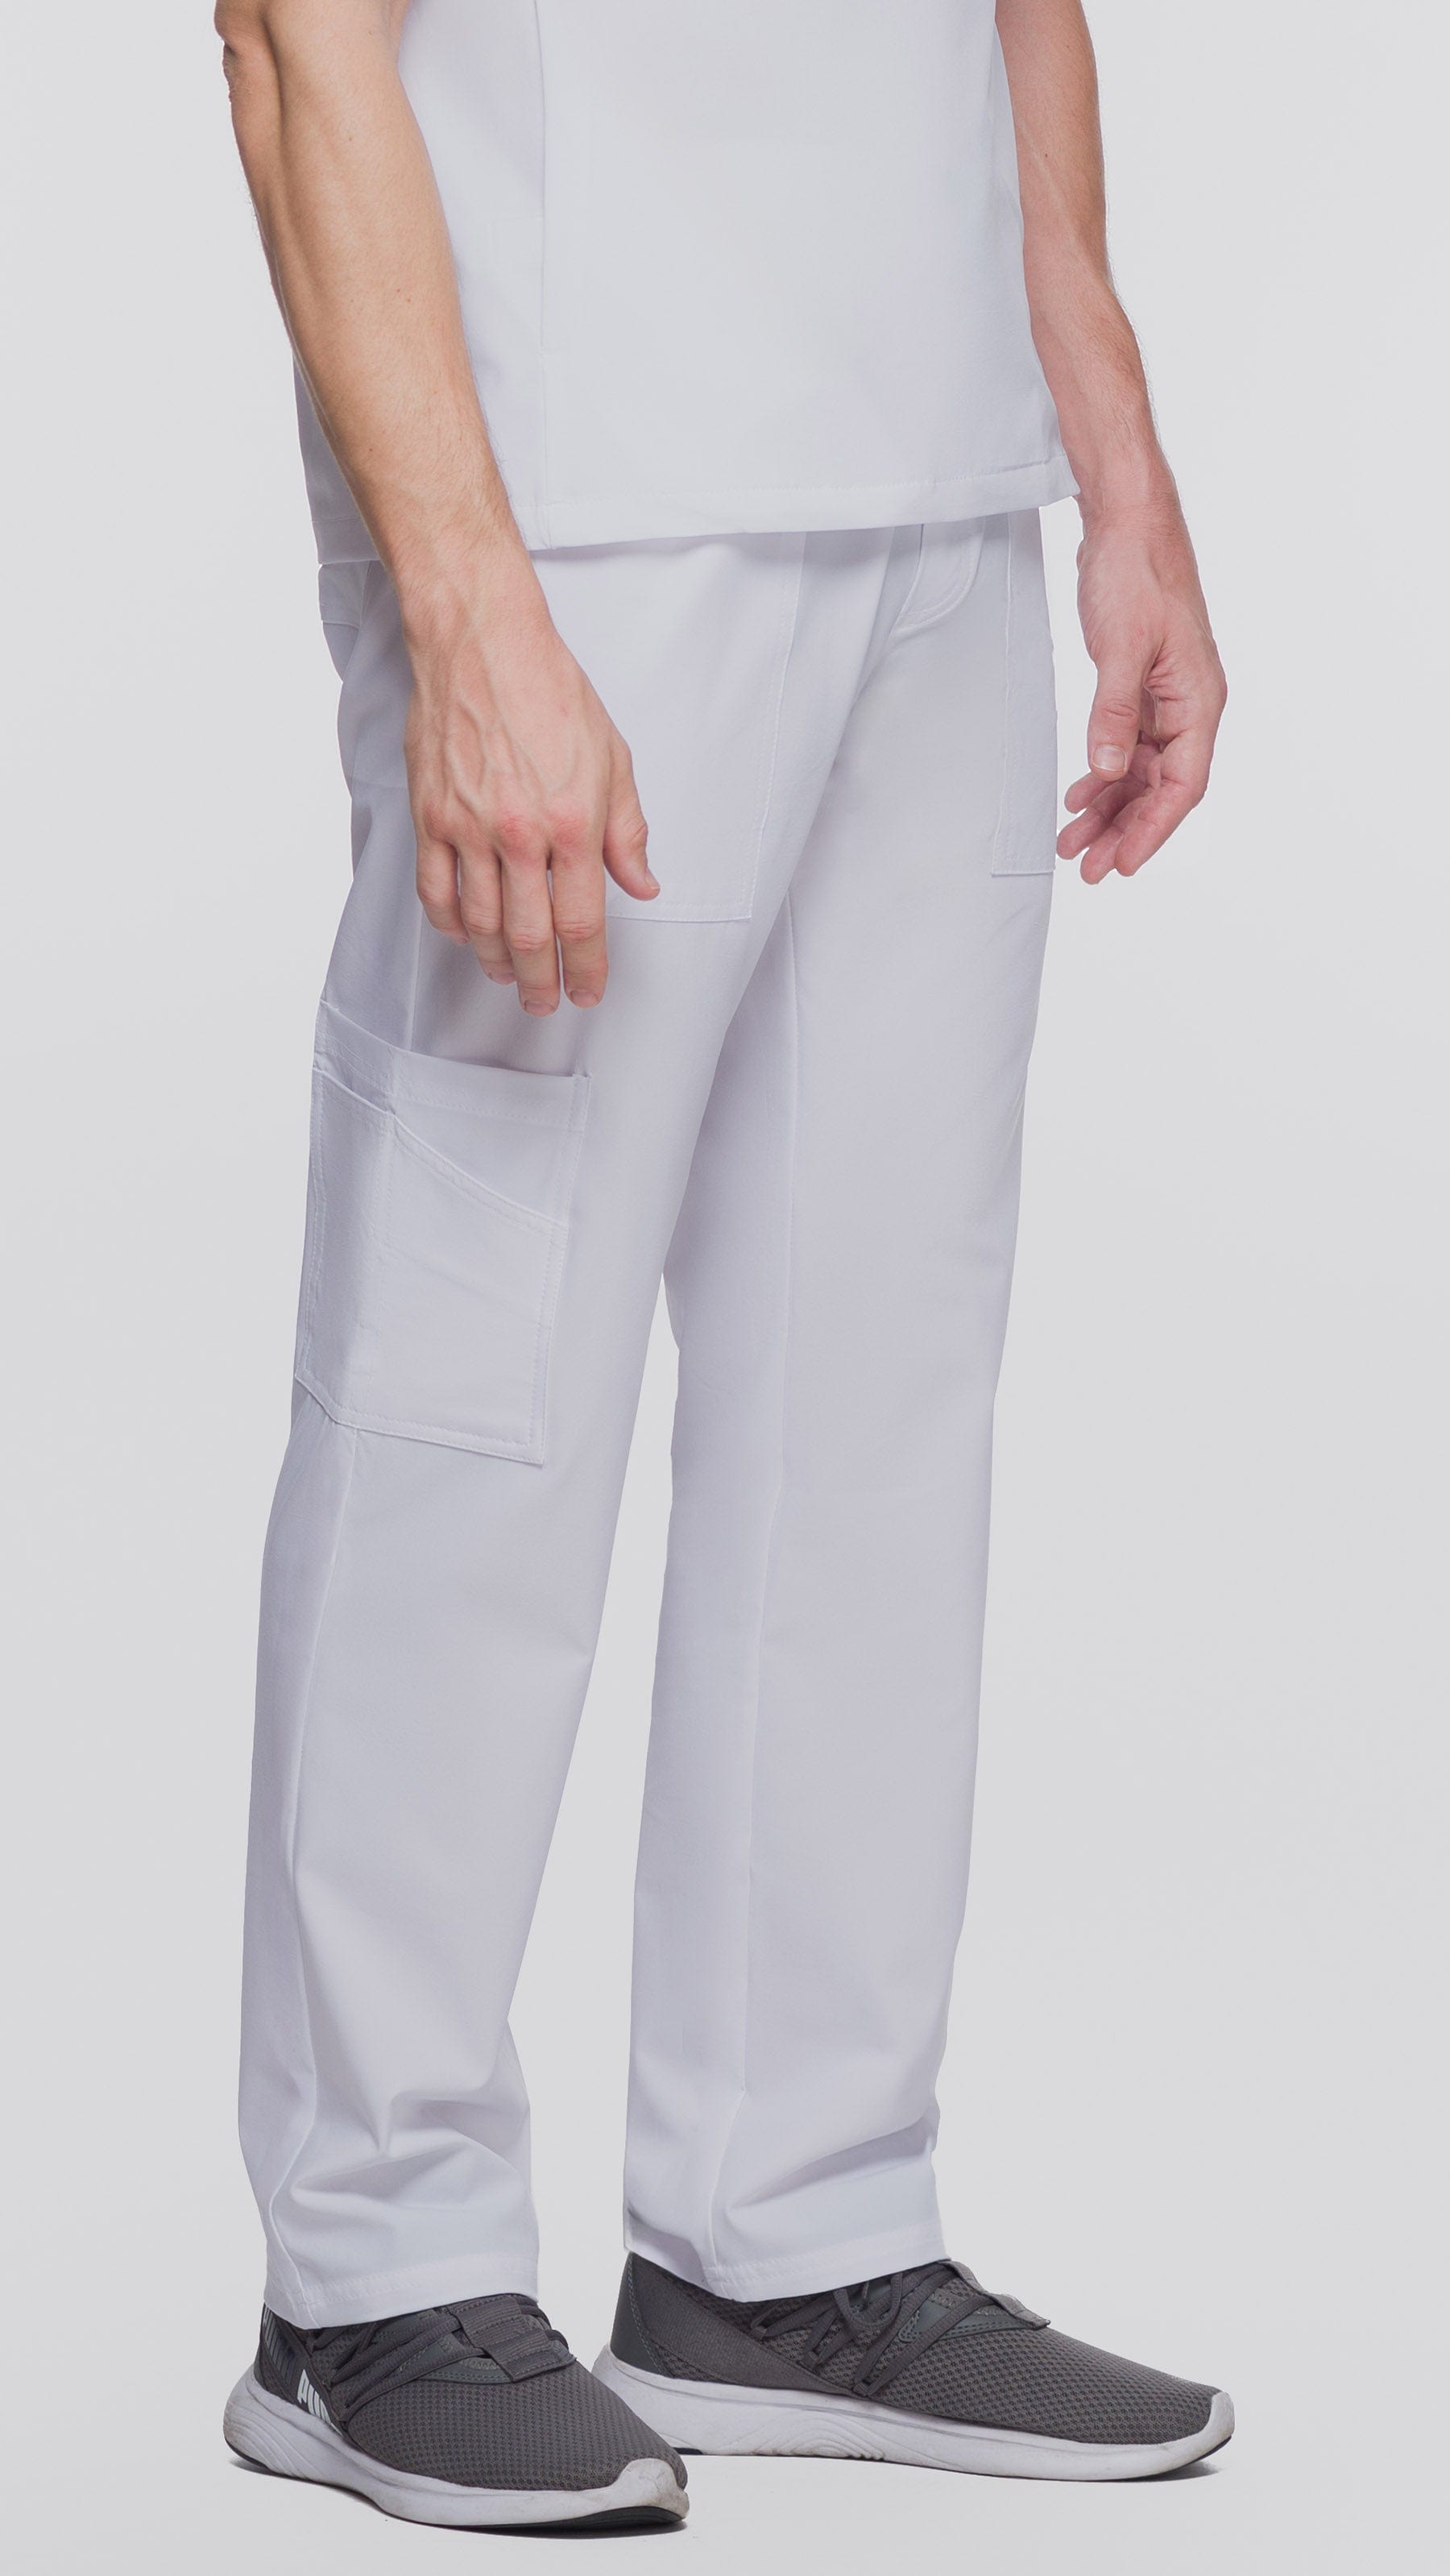 Kanaus® Pants Classic Deep White | Caballero - Kanaus